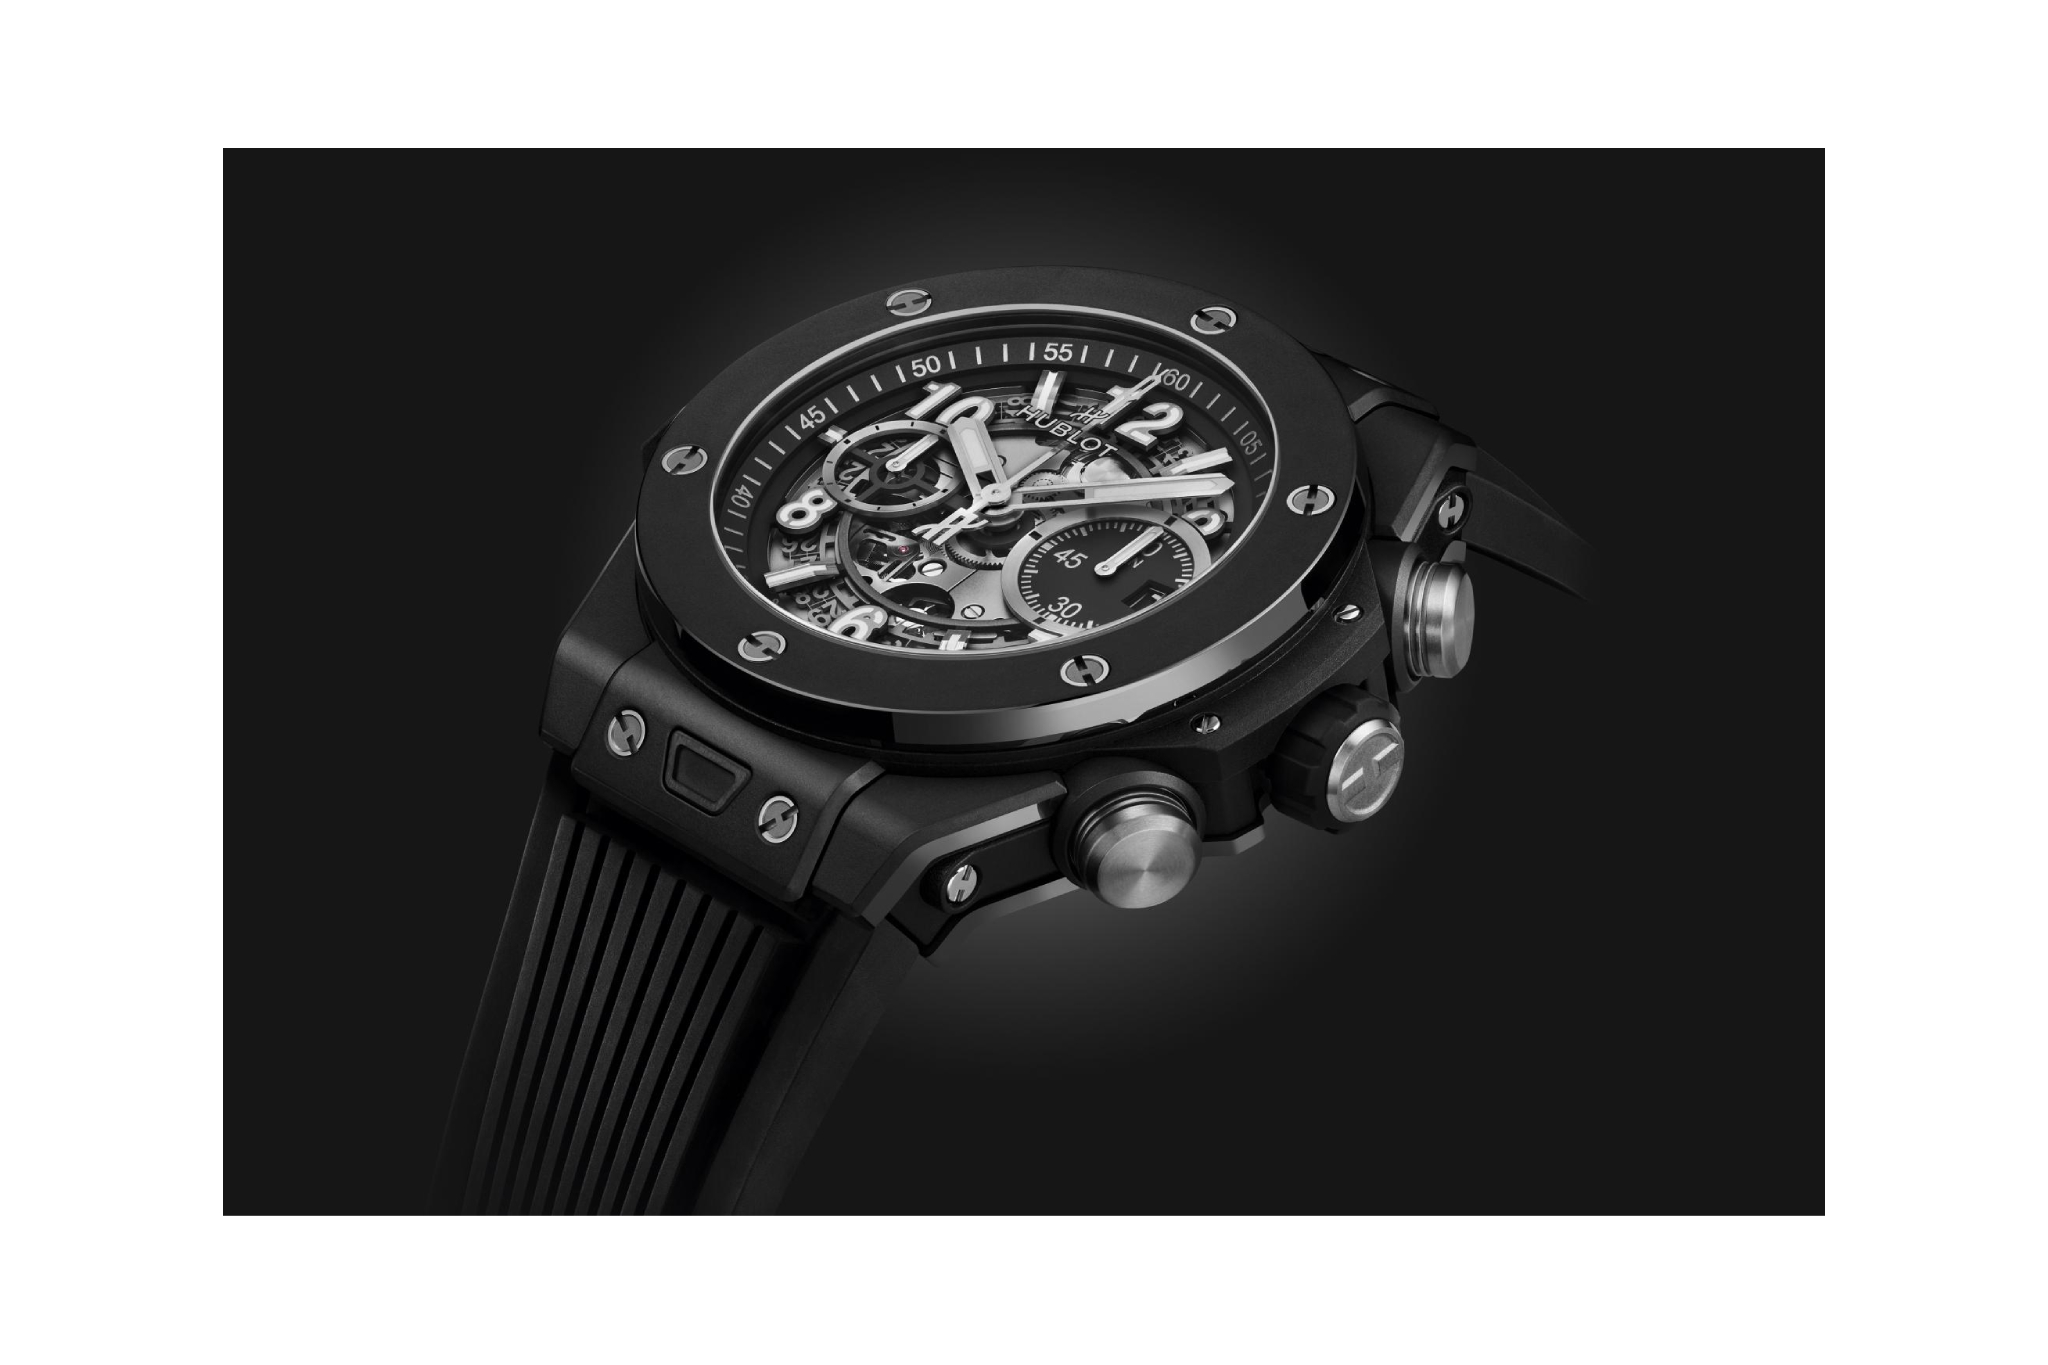 Men's watch / unisex  HUBLOT, Big Bang Unico Black Magic / 44mm, SKU: 421.CI.1170.RX | watchapproach.com